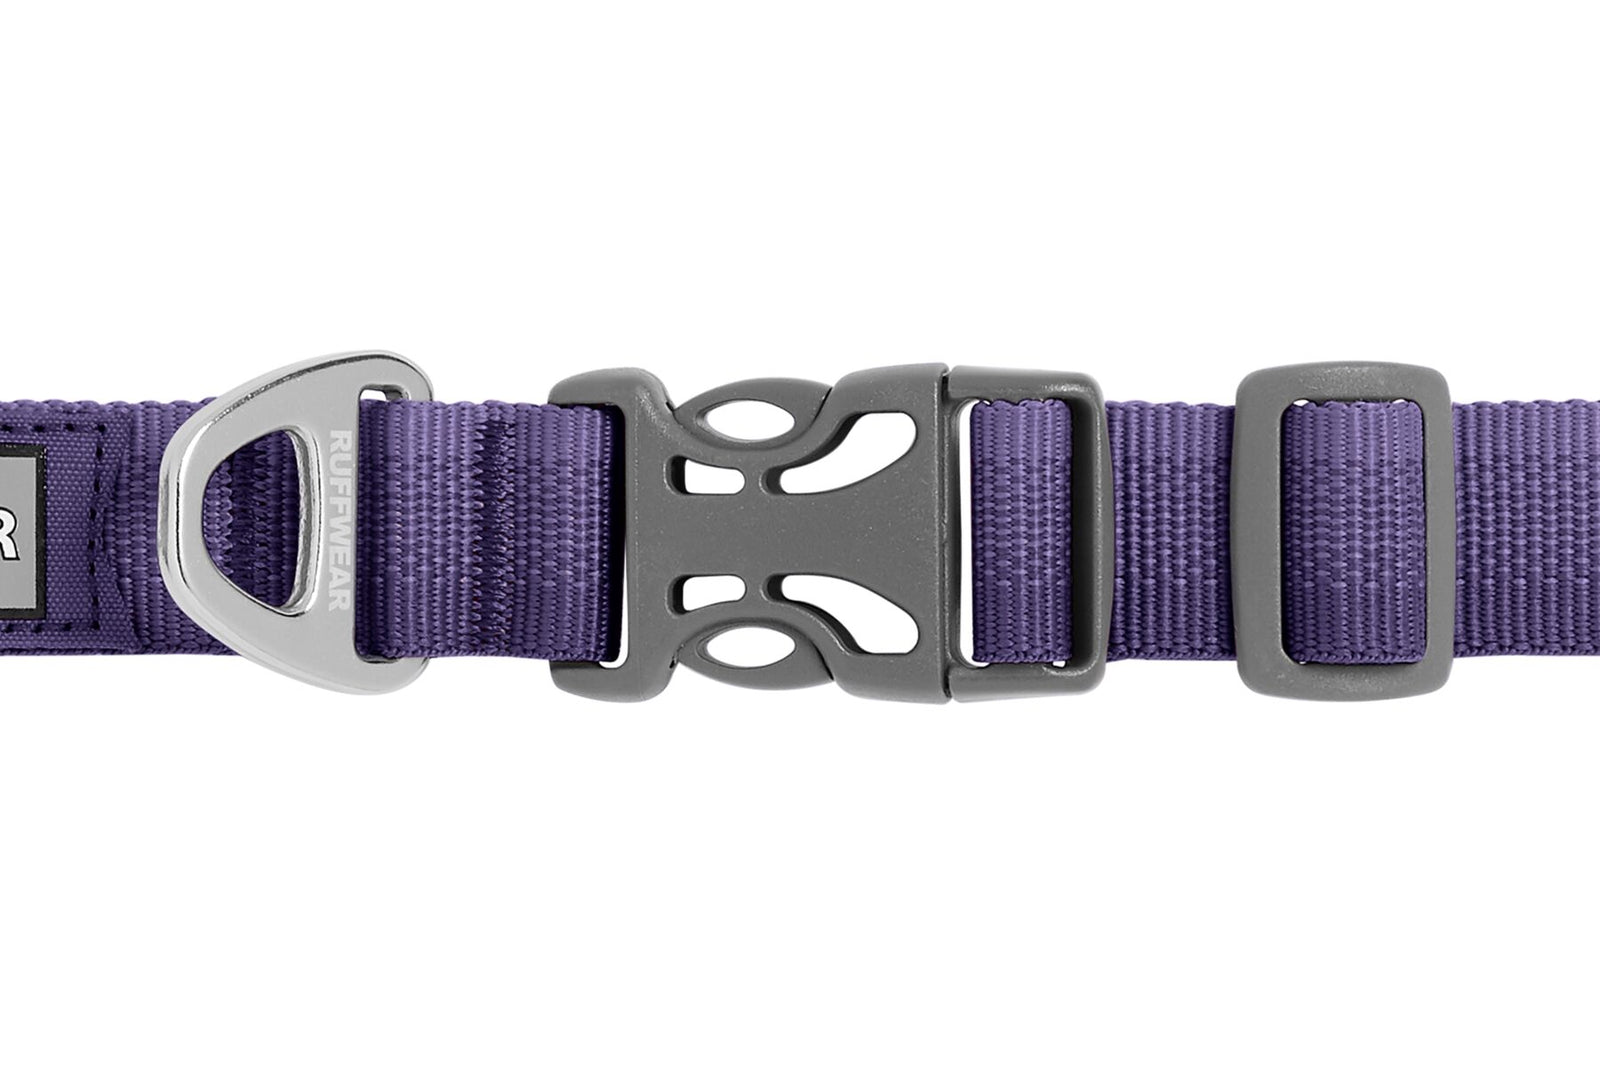 Front Range Collar Purple Sage D20 RUFFWEAR   